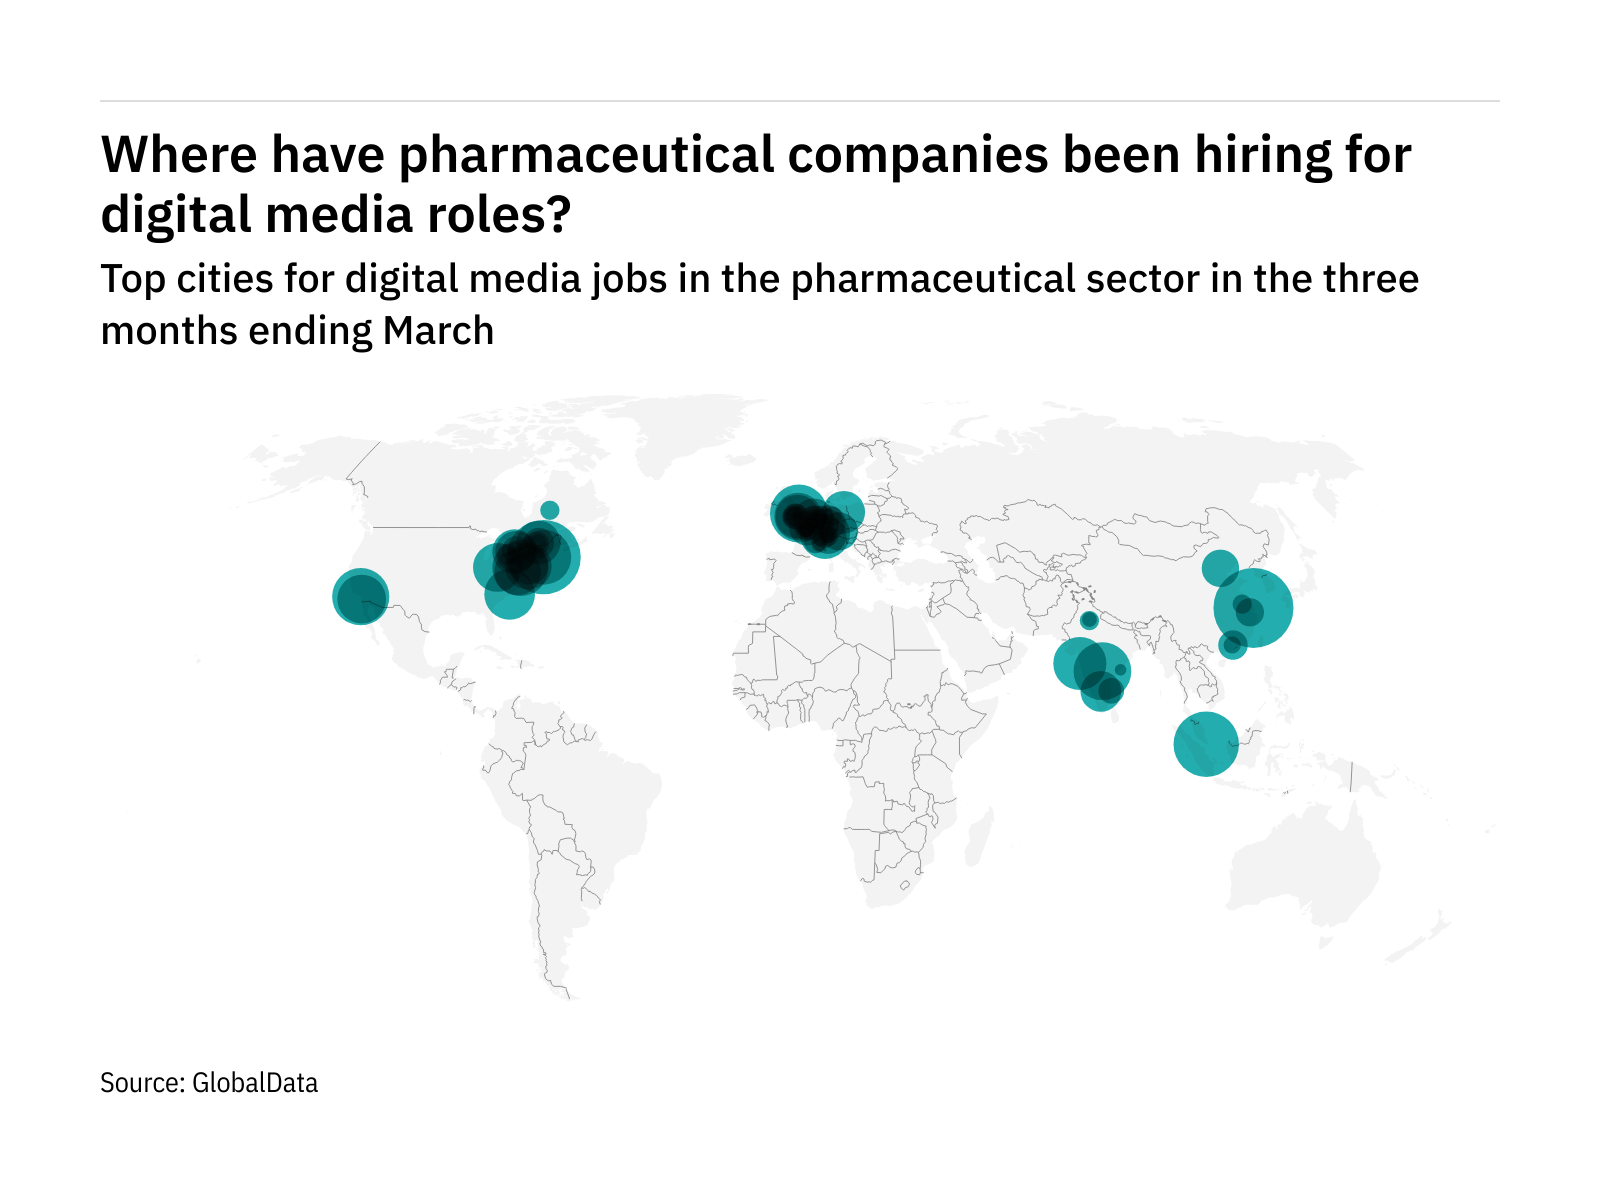 North America is seeing a hiring boom in pharmaceutical industry digital media roles